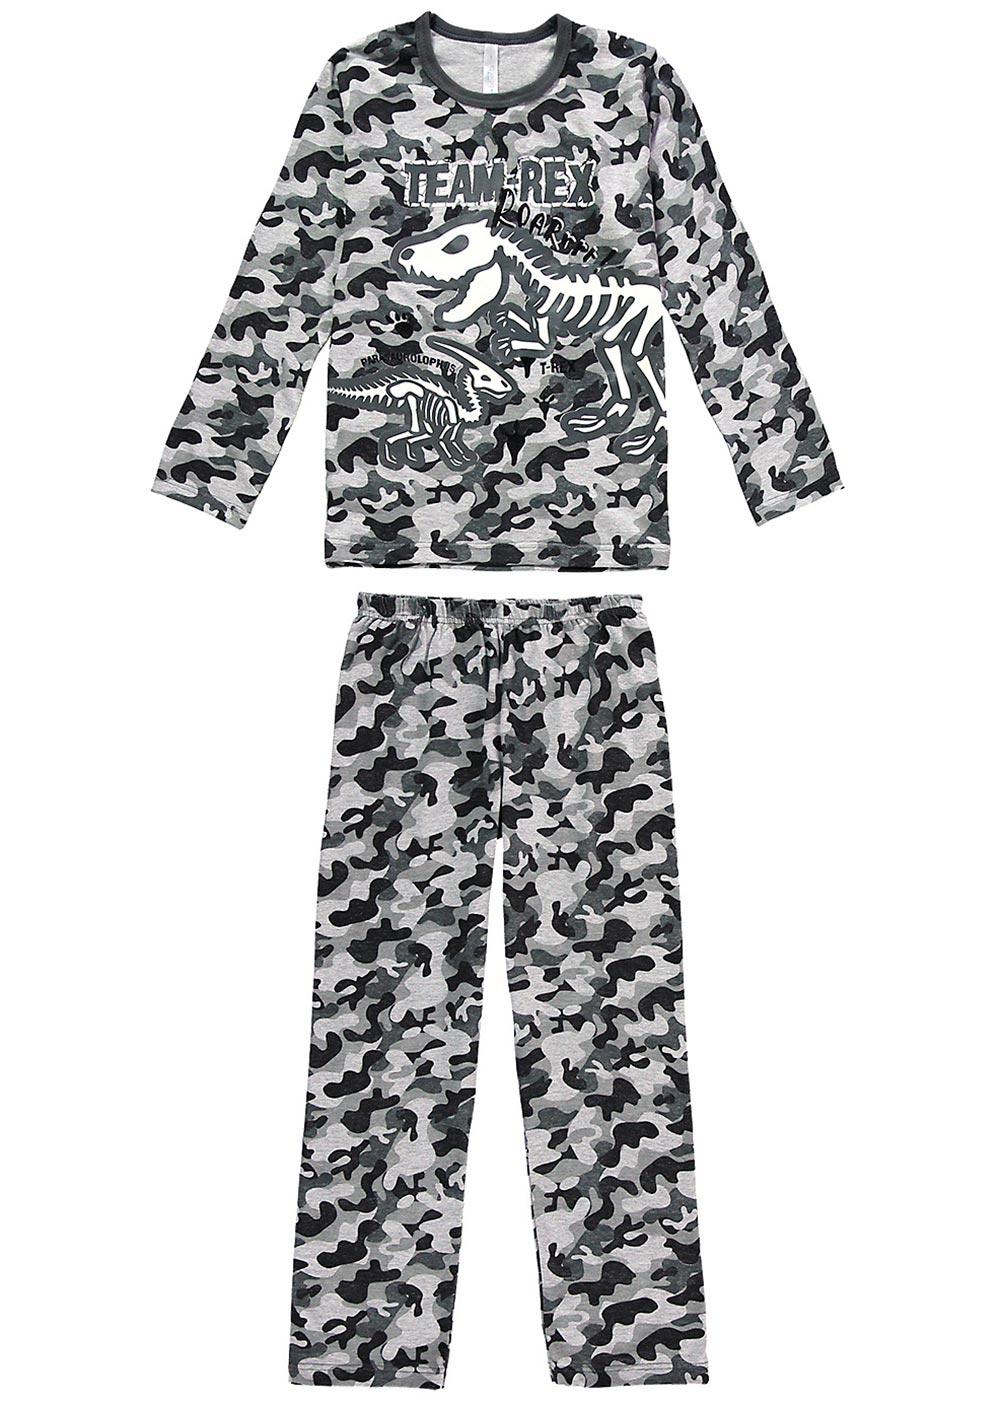 Pijama Infantil Masculino Inverno Cinza Team Rex - Malwee